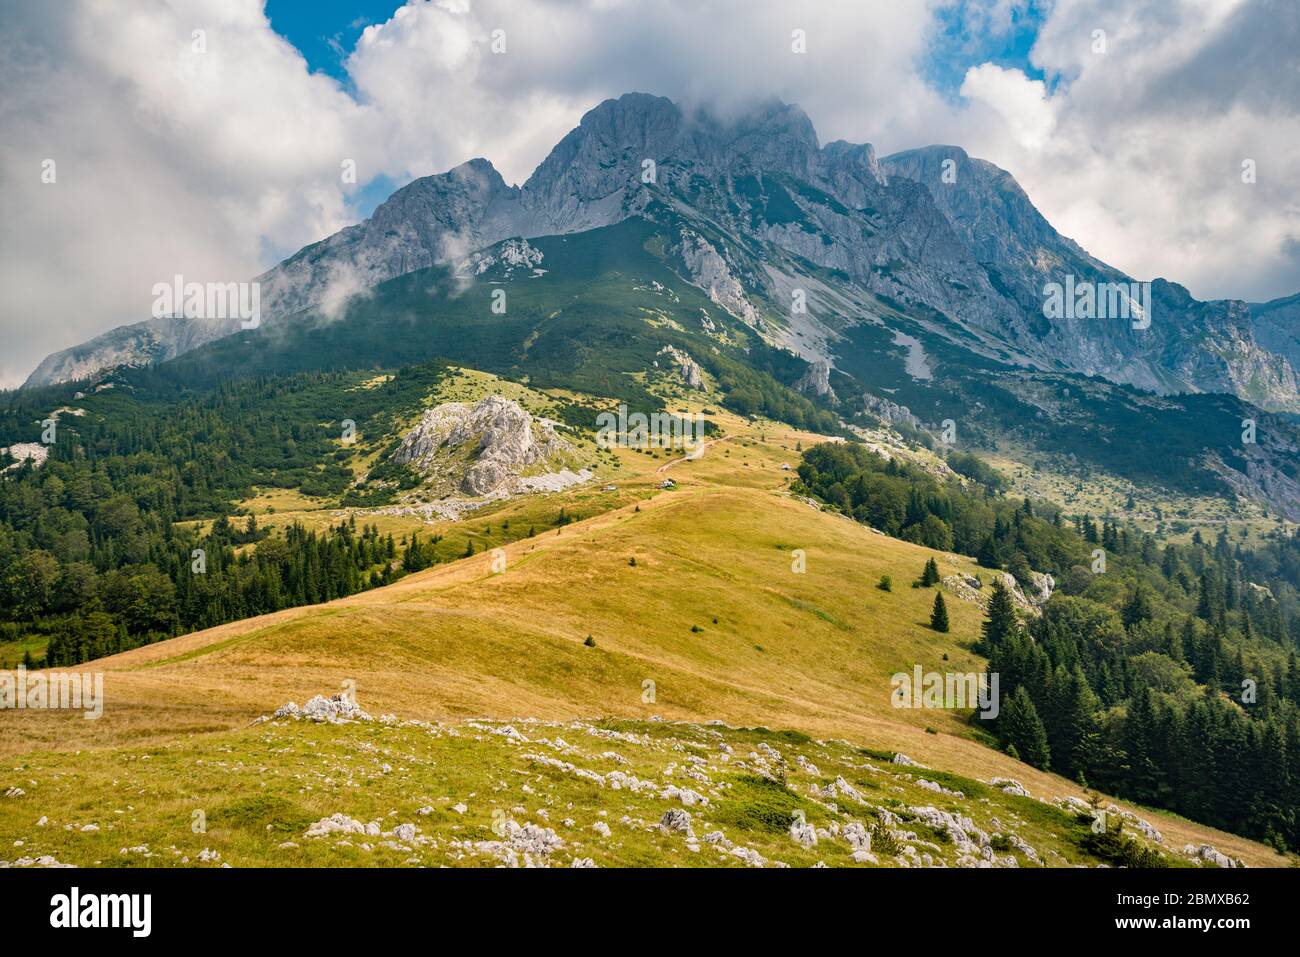 Maglic massif, Prijevor area, Sutjeska National Park, Dinaric Alps, Republika Srpska, Bosnia and Herzegovina Stock Photo